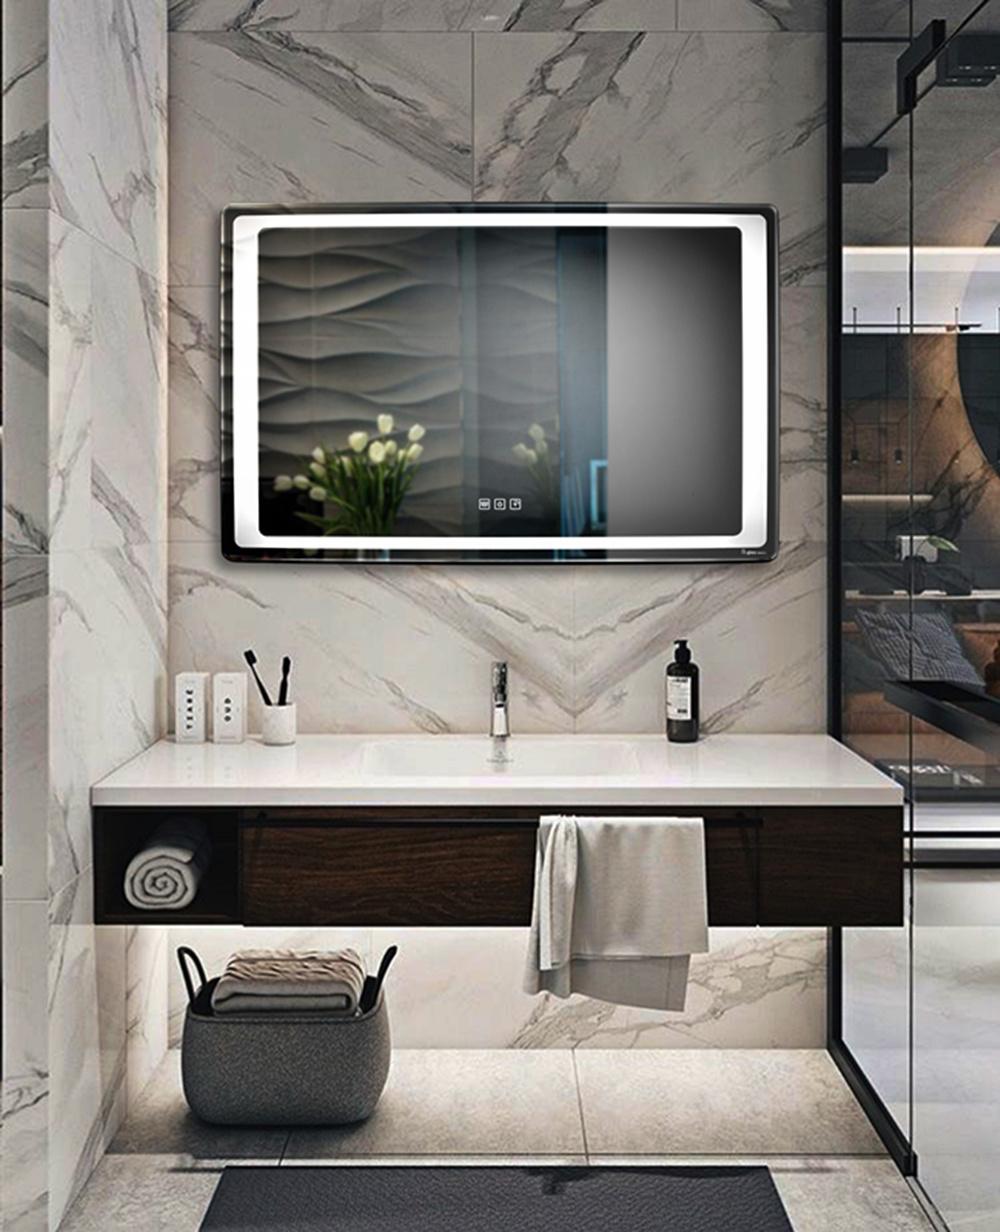 H500mm*700mm 3D Illuminated Lighted LED Bathroom Wall Mirror (MR-YB1-DJ002)